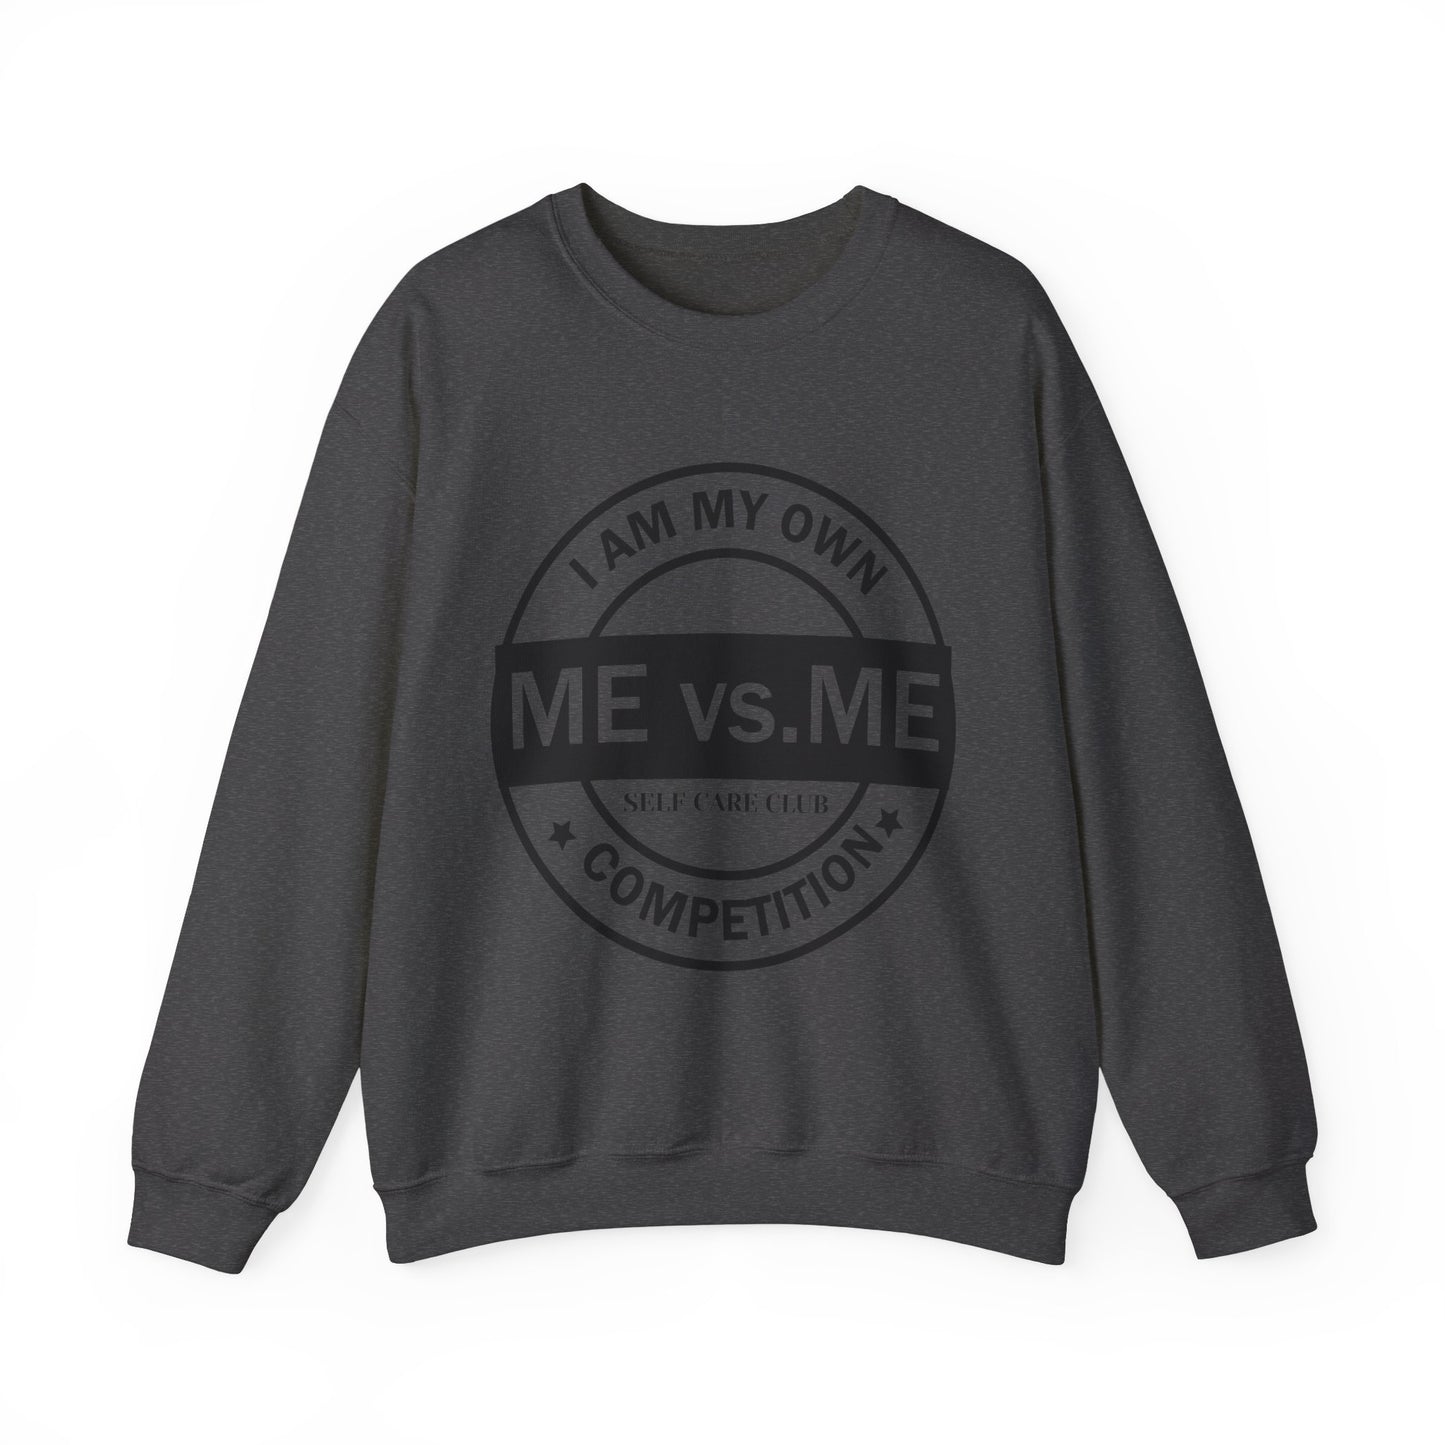 ME vs. ME Sweatshirt